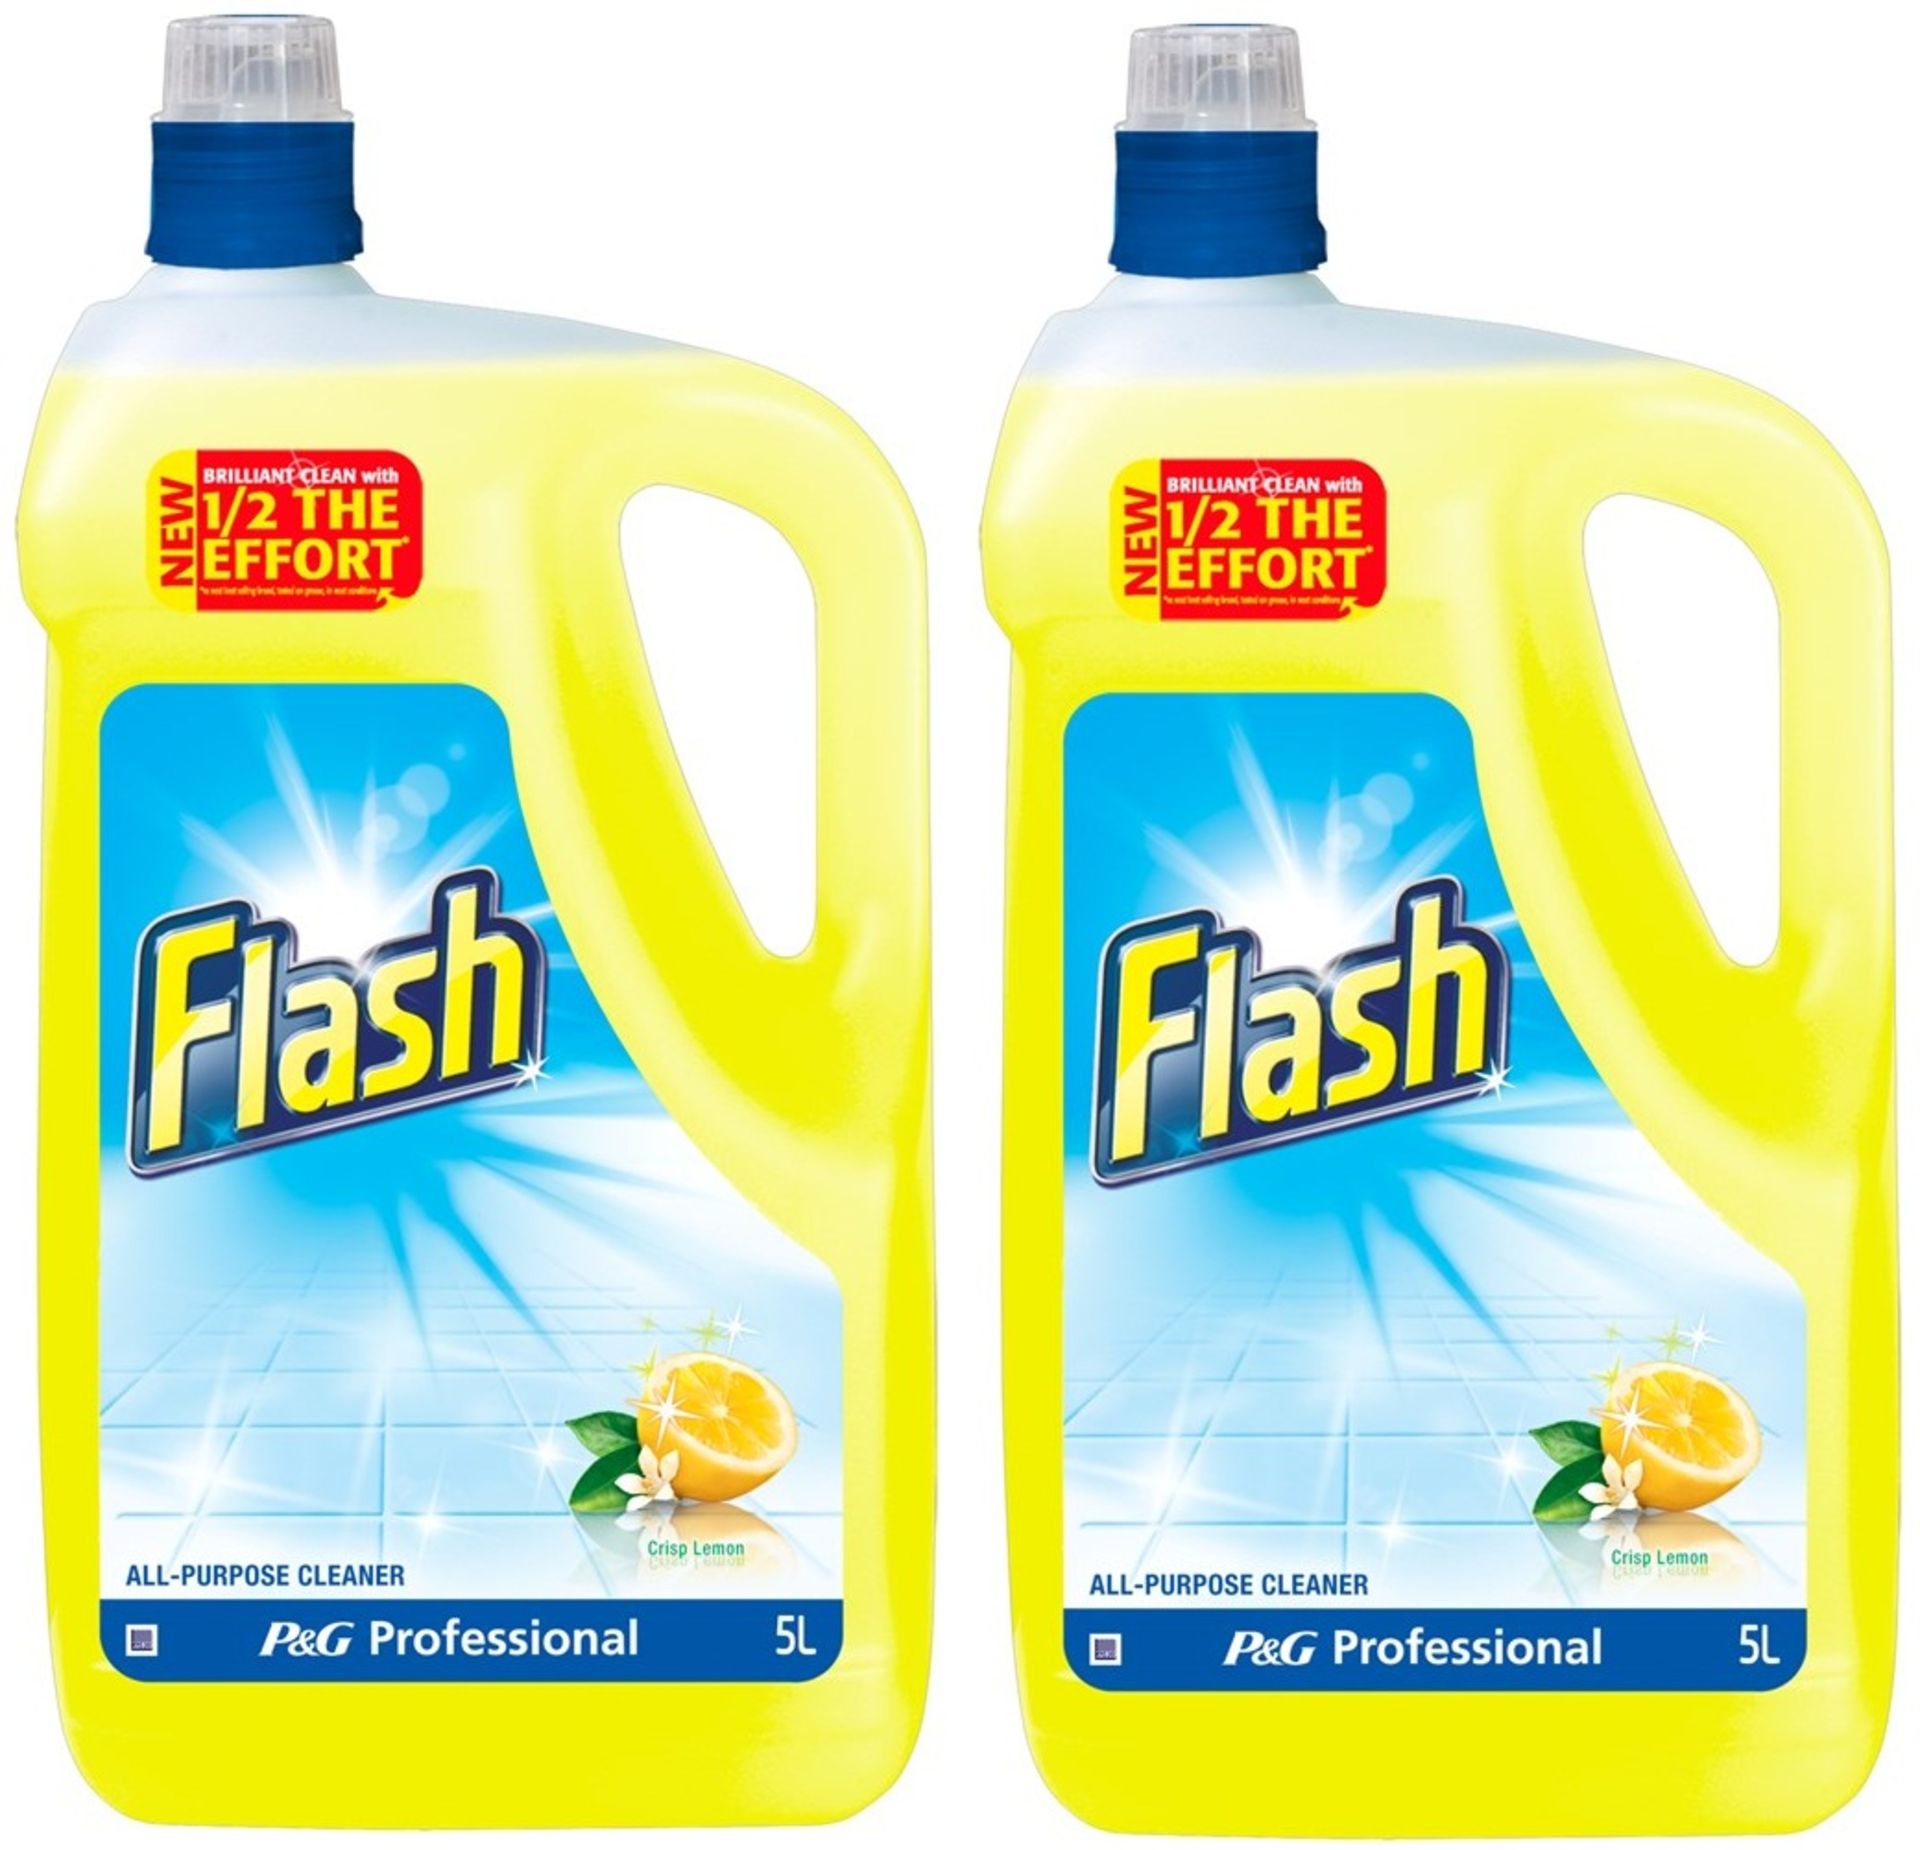 V *TRADE QTY* Brand New 10 Litres Flash All Purpose Cleaner Lemon eBay Price £29.72 X 20 YOUR BID